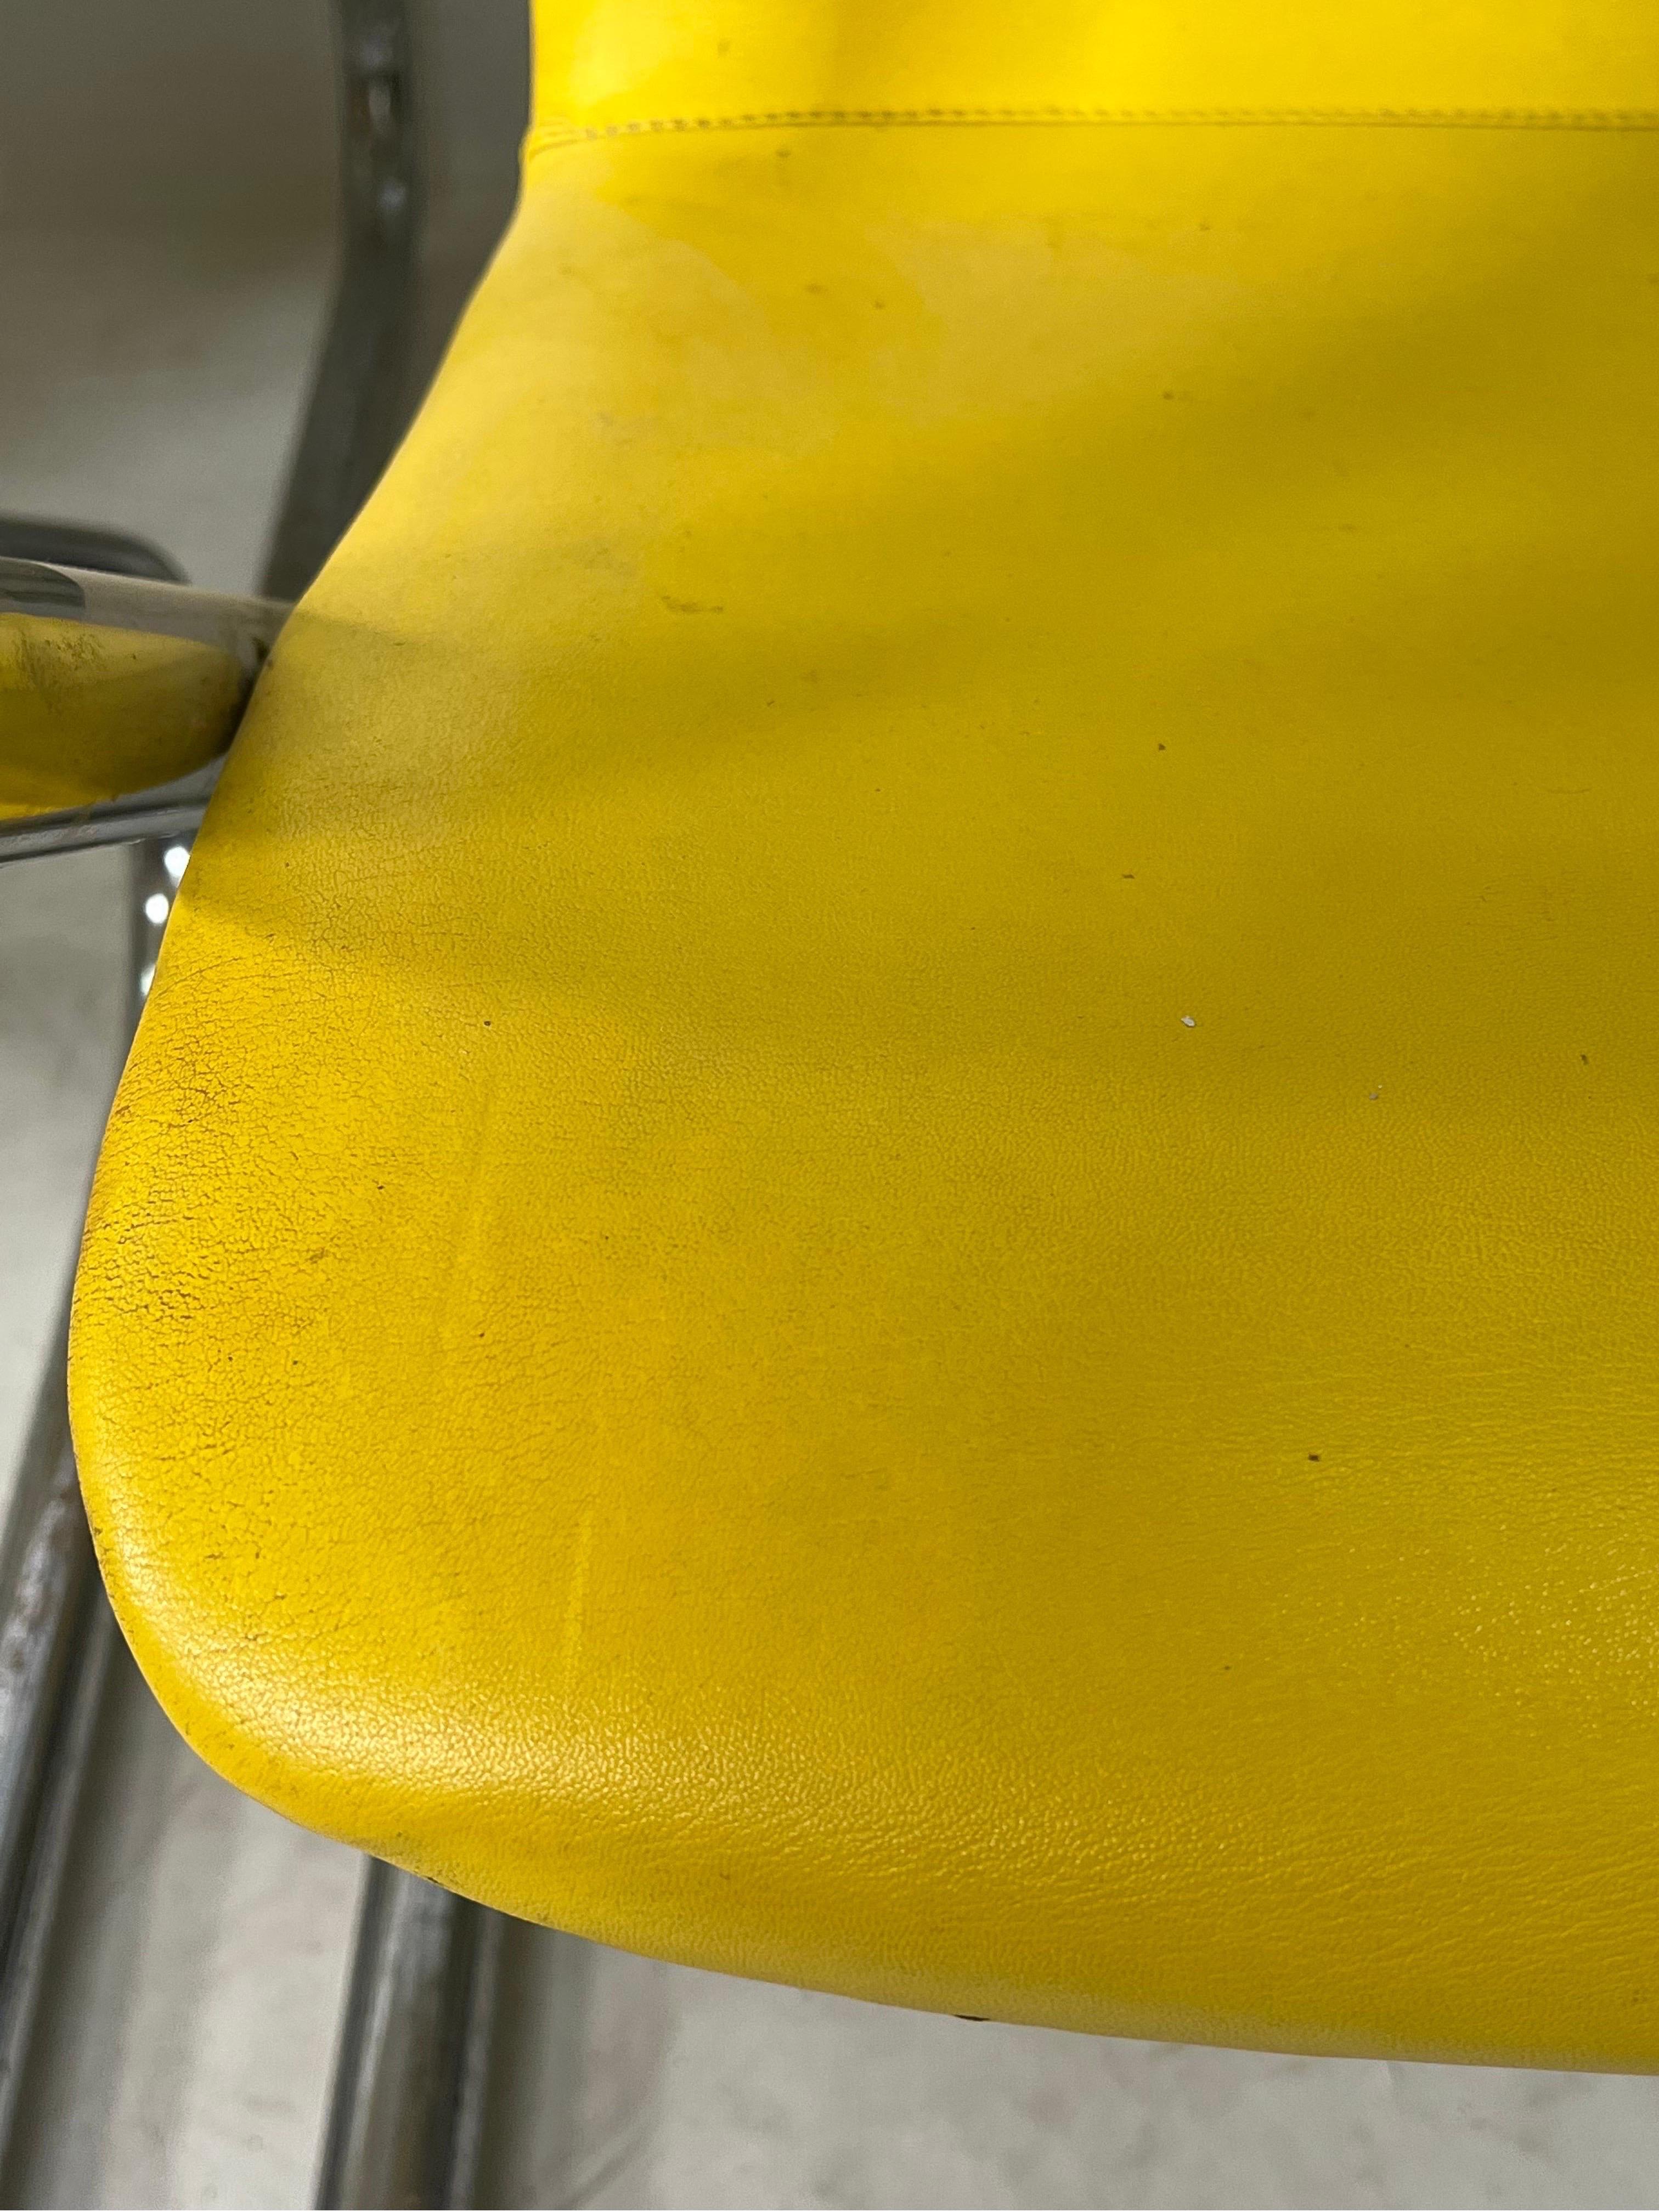 1970s Tubular Chrome Yellow Dining Chair 36 Available 3